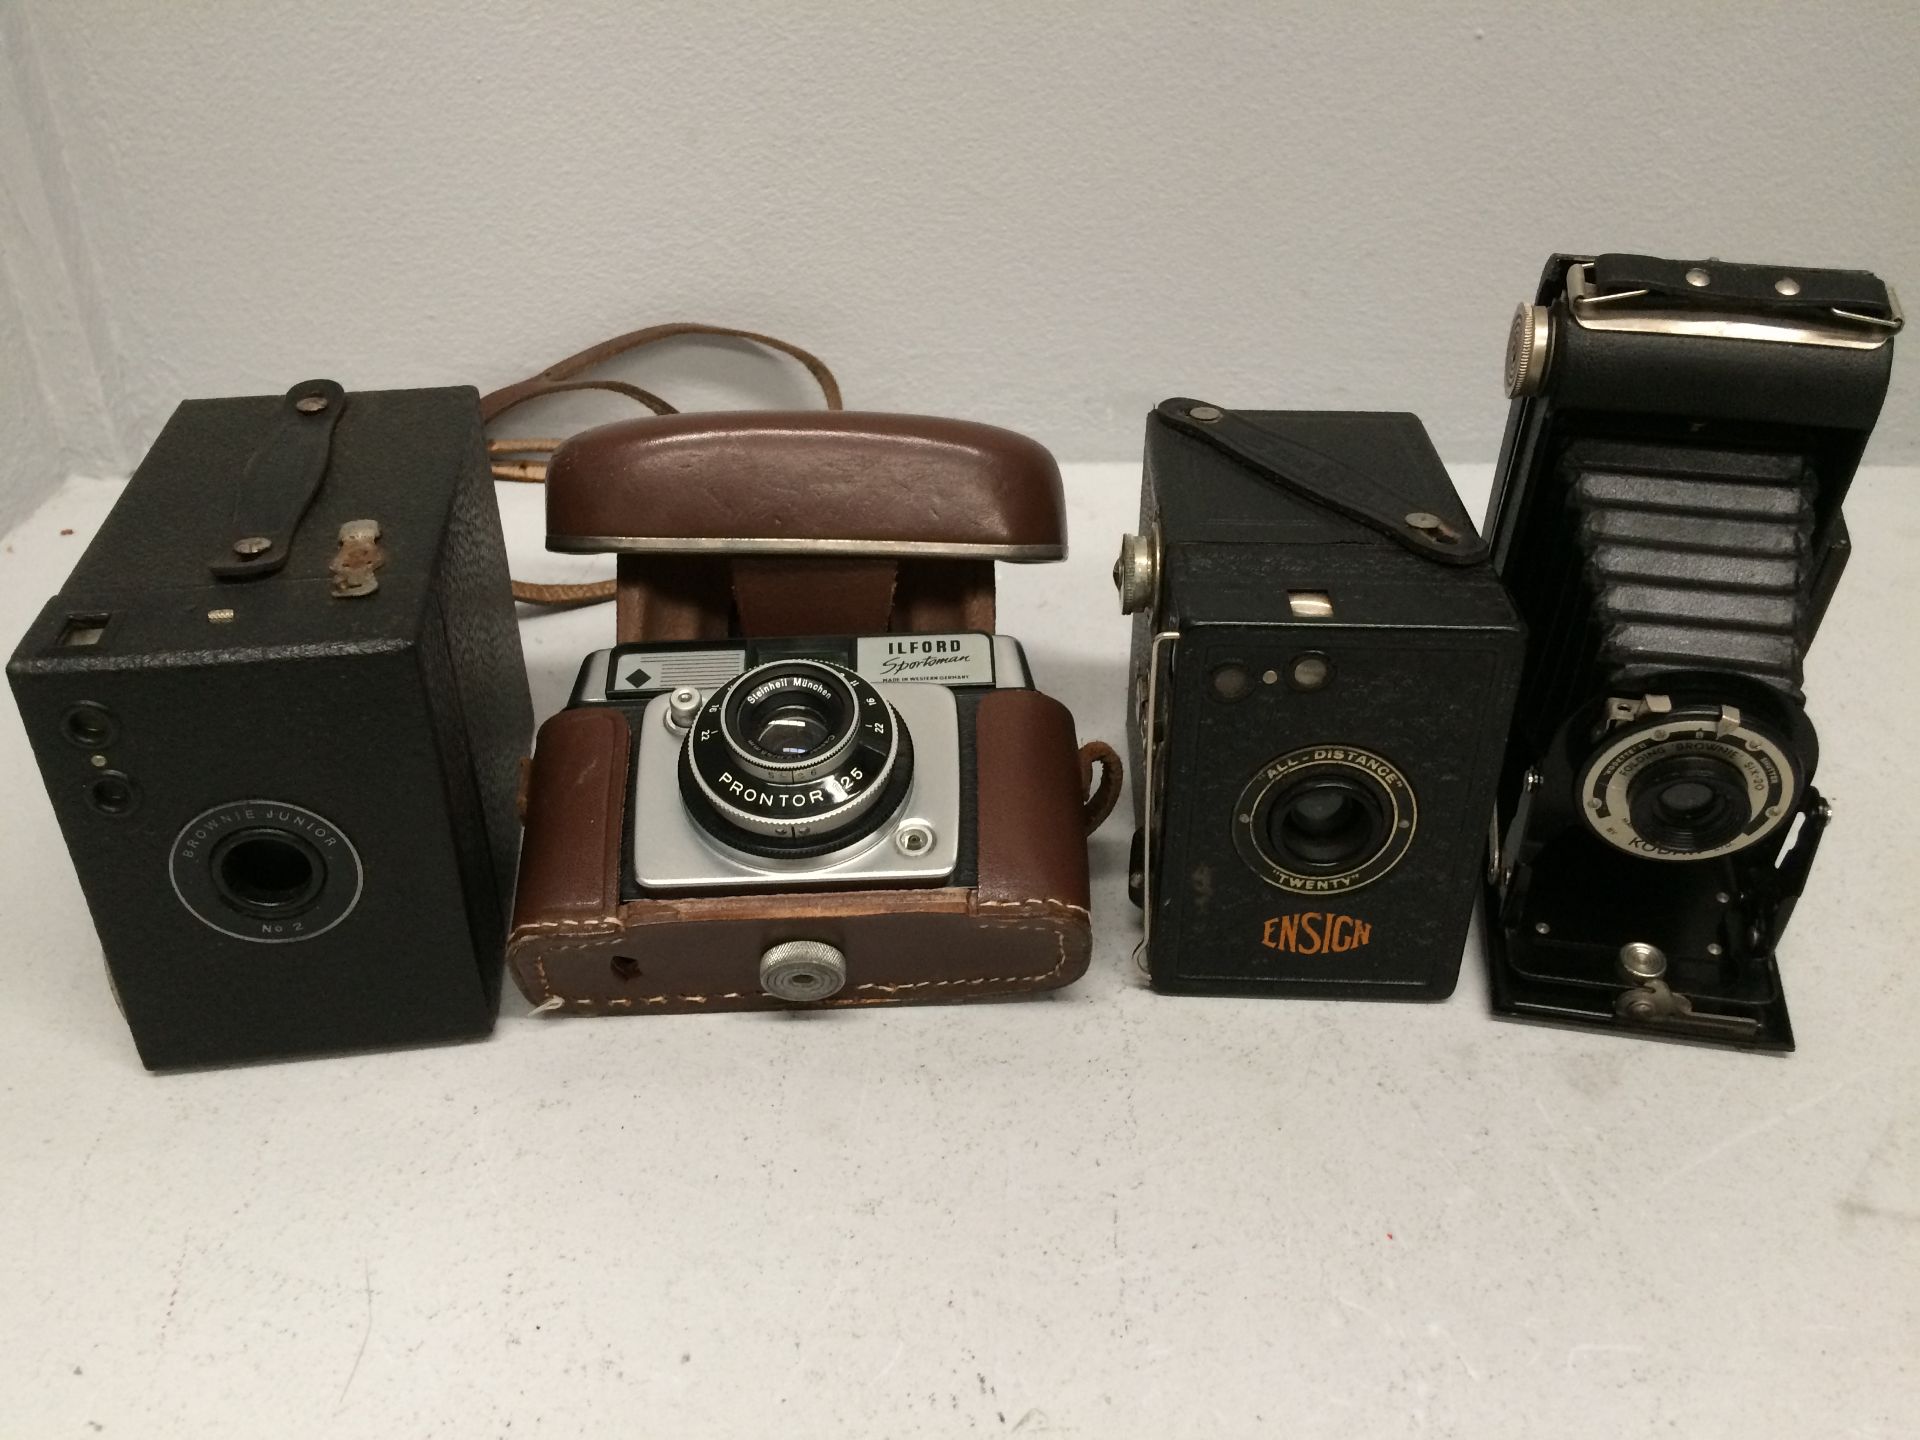 4 x items - Kodak folding Brownie six-20 camera, Ilford Sportsman camera with Prontor 12.